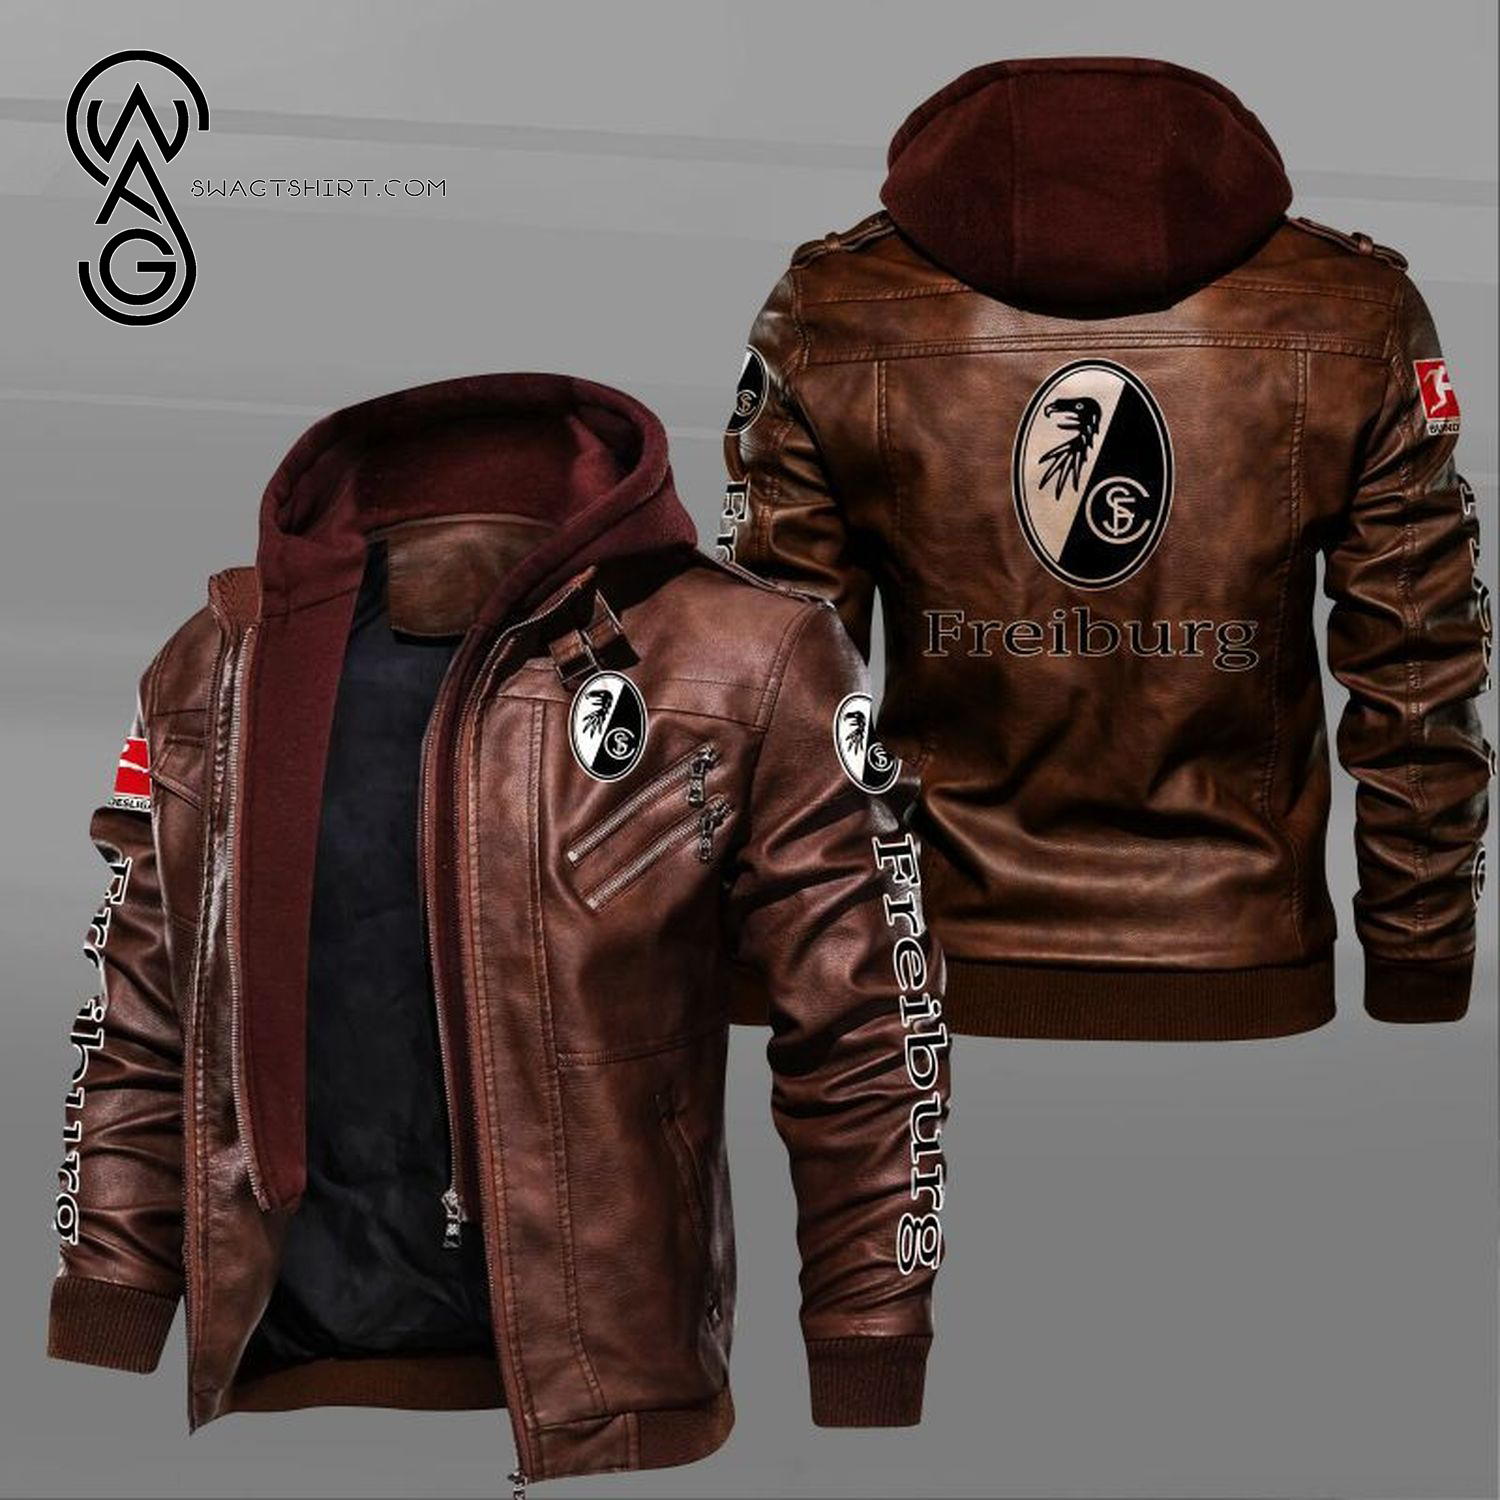 SC Freiburg Football Club Leather Jacket